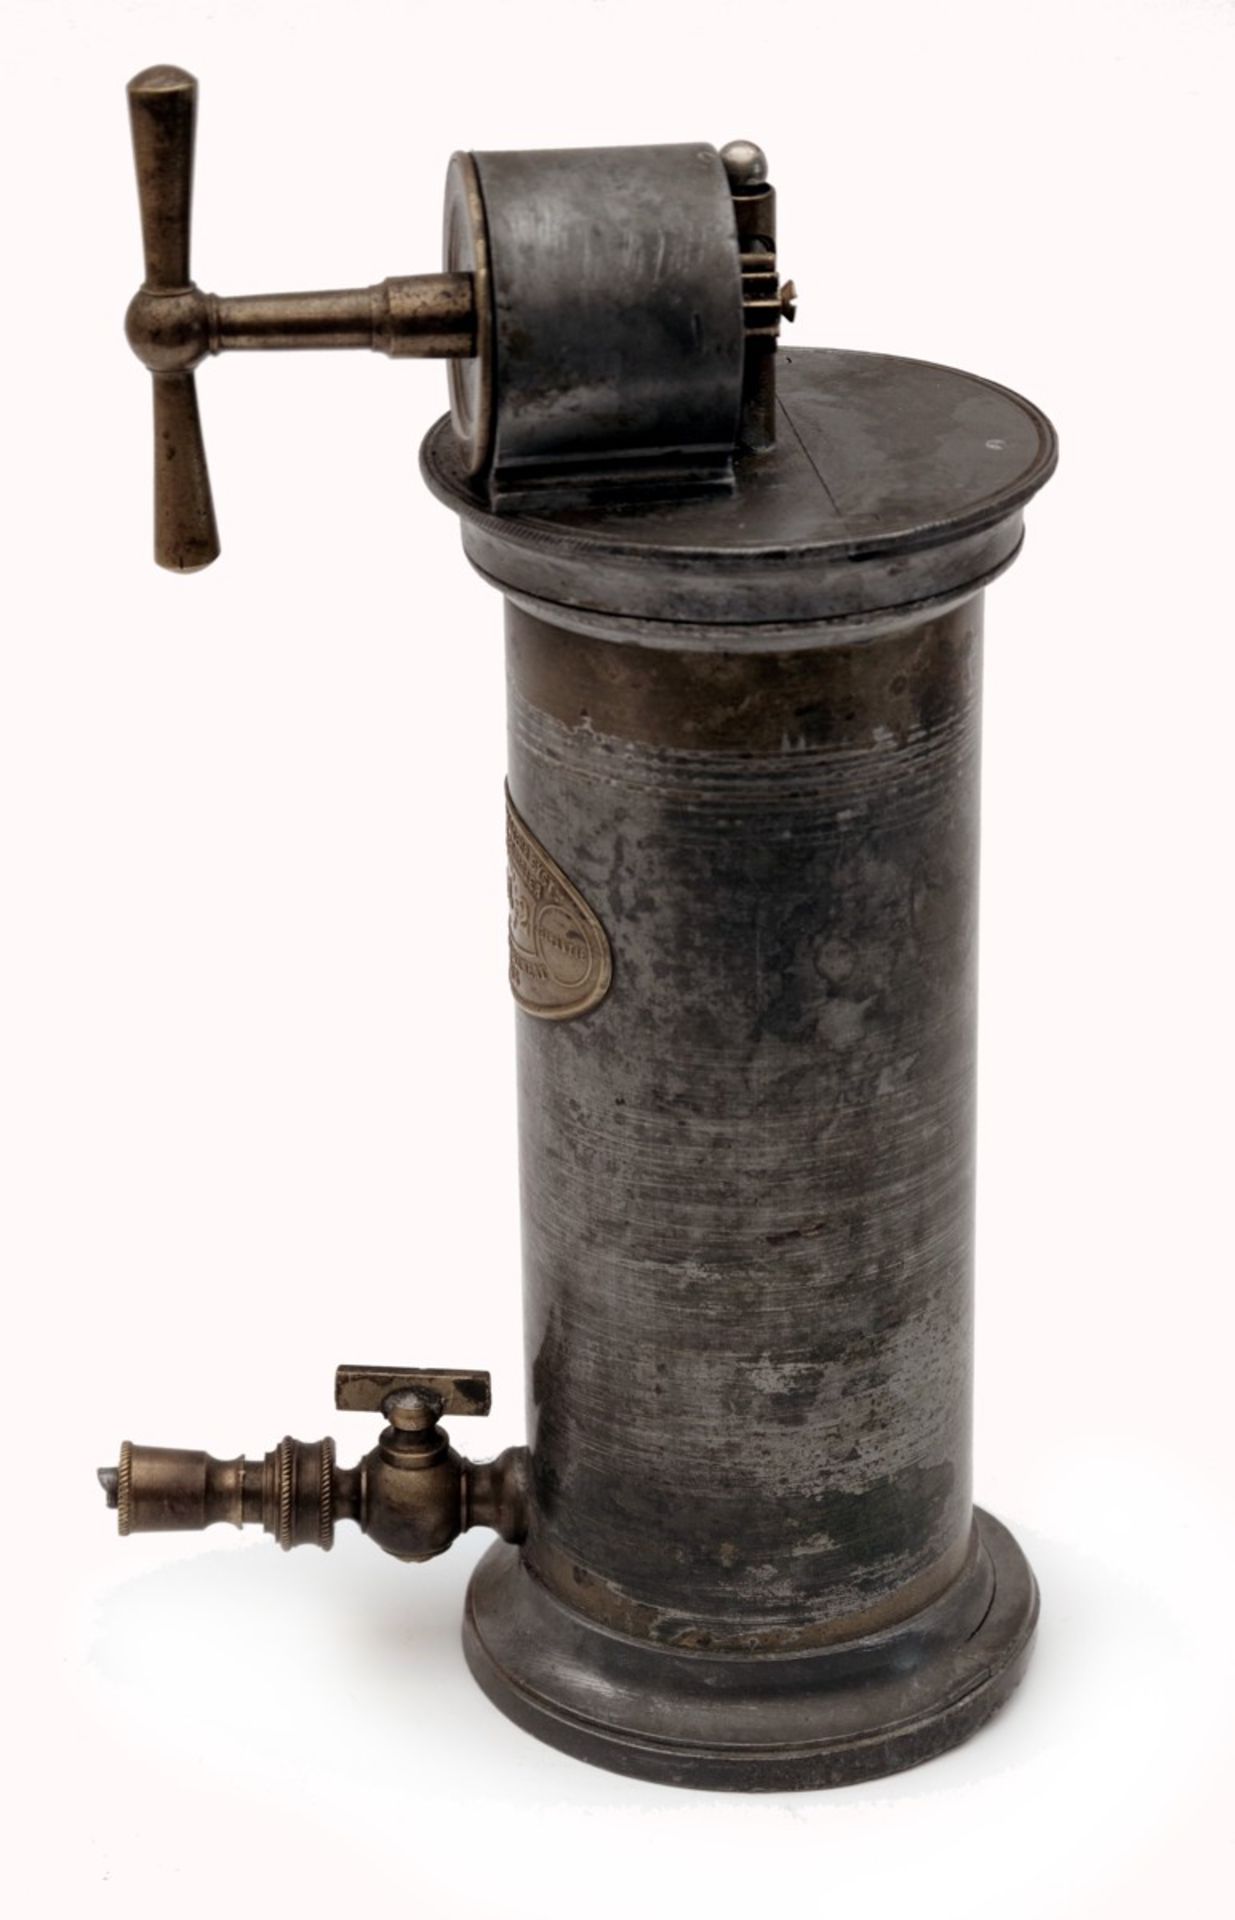 Antique French „Irrigateur“ Medical Instrument - Image 3 of 3